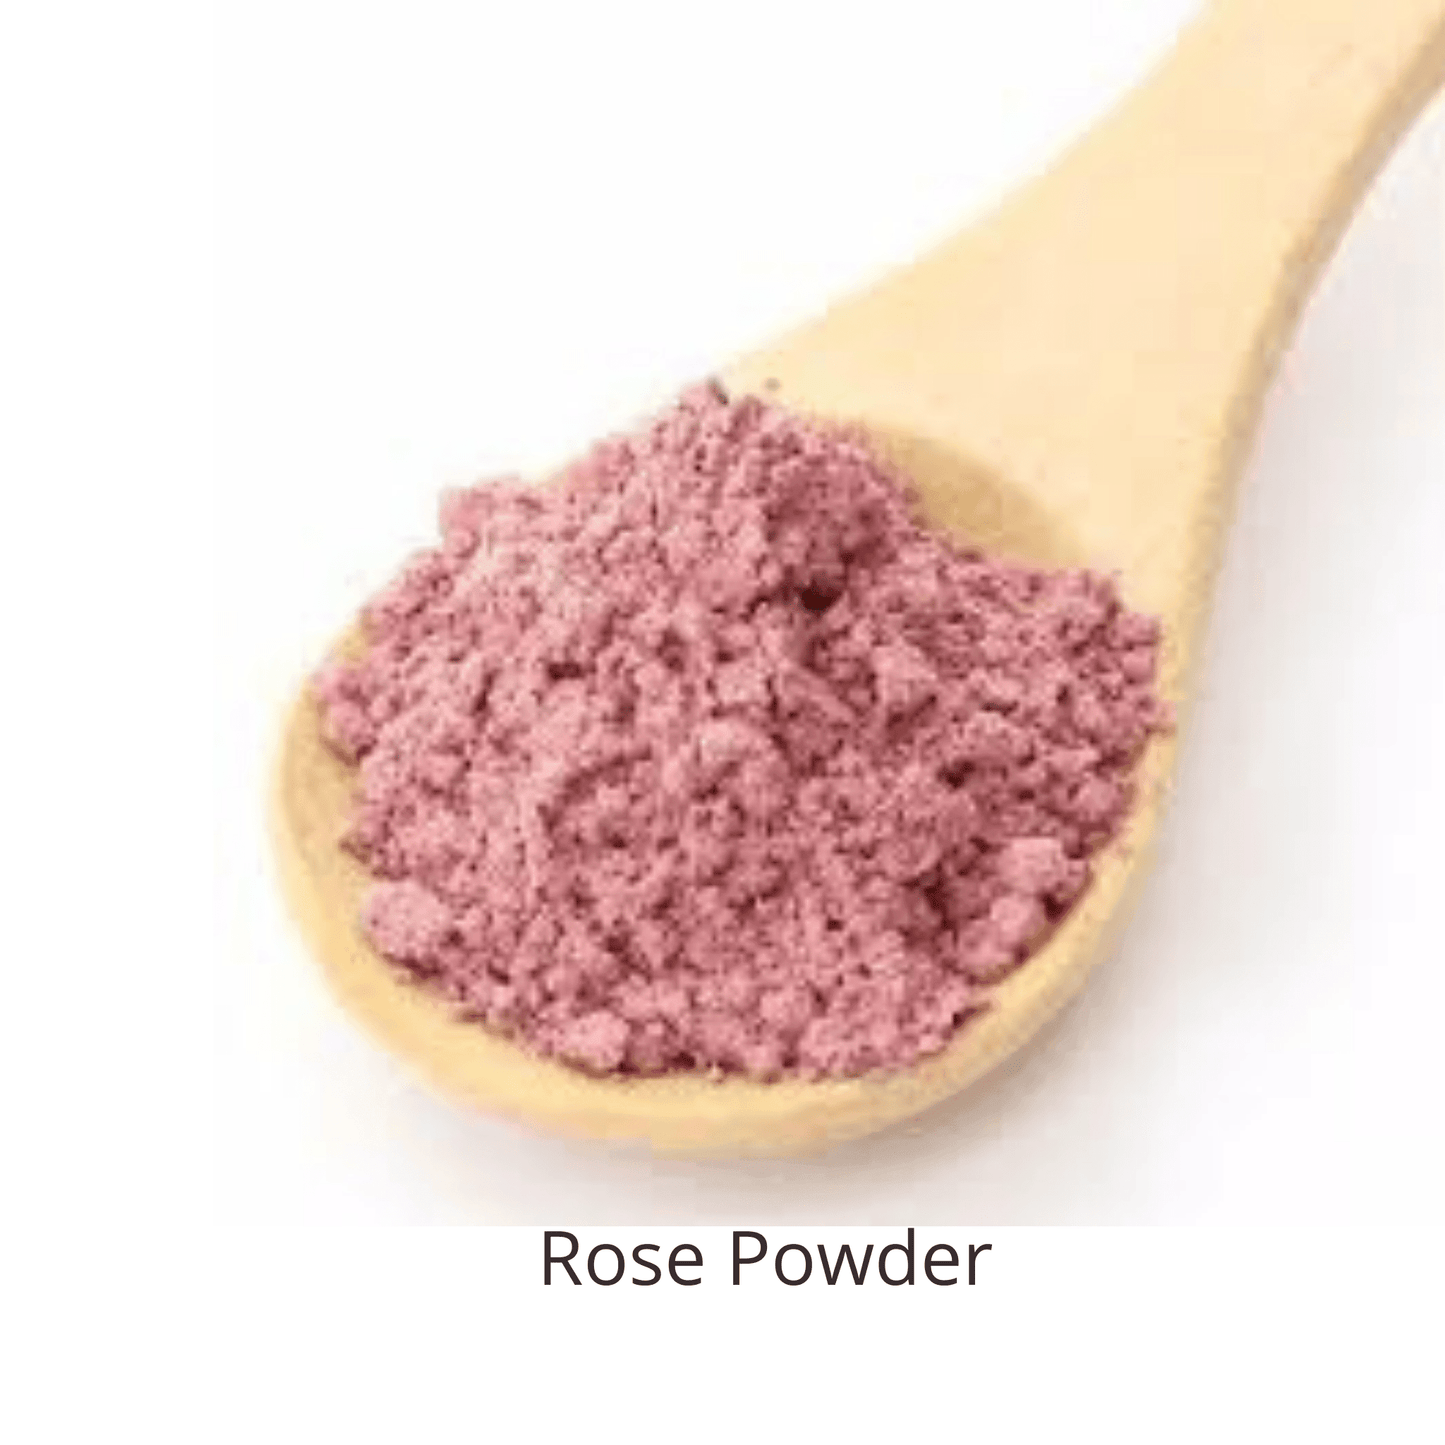 Be Green Bath and Body Powder contains rose petal powder